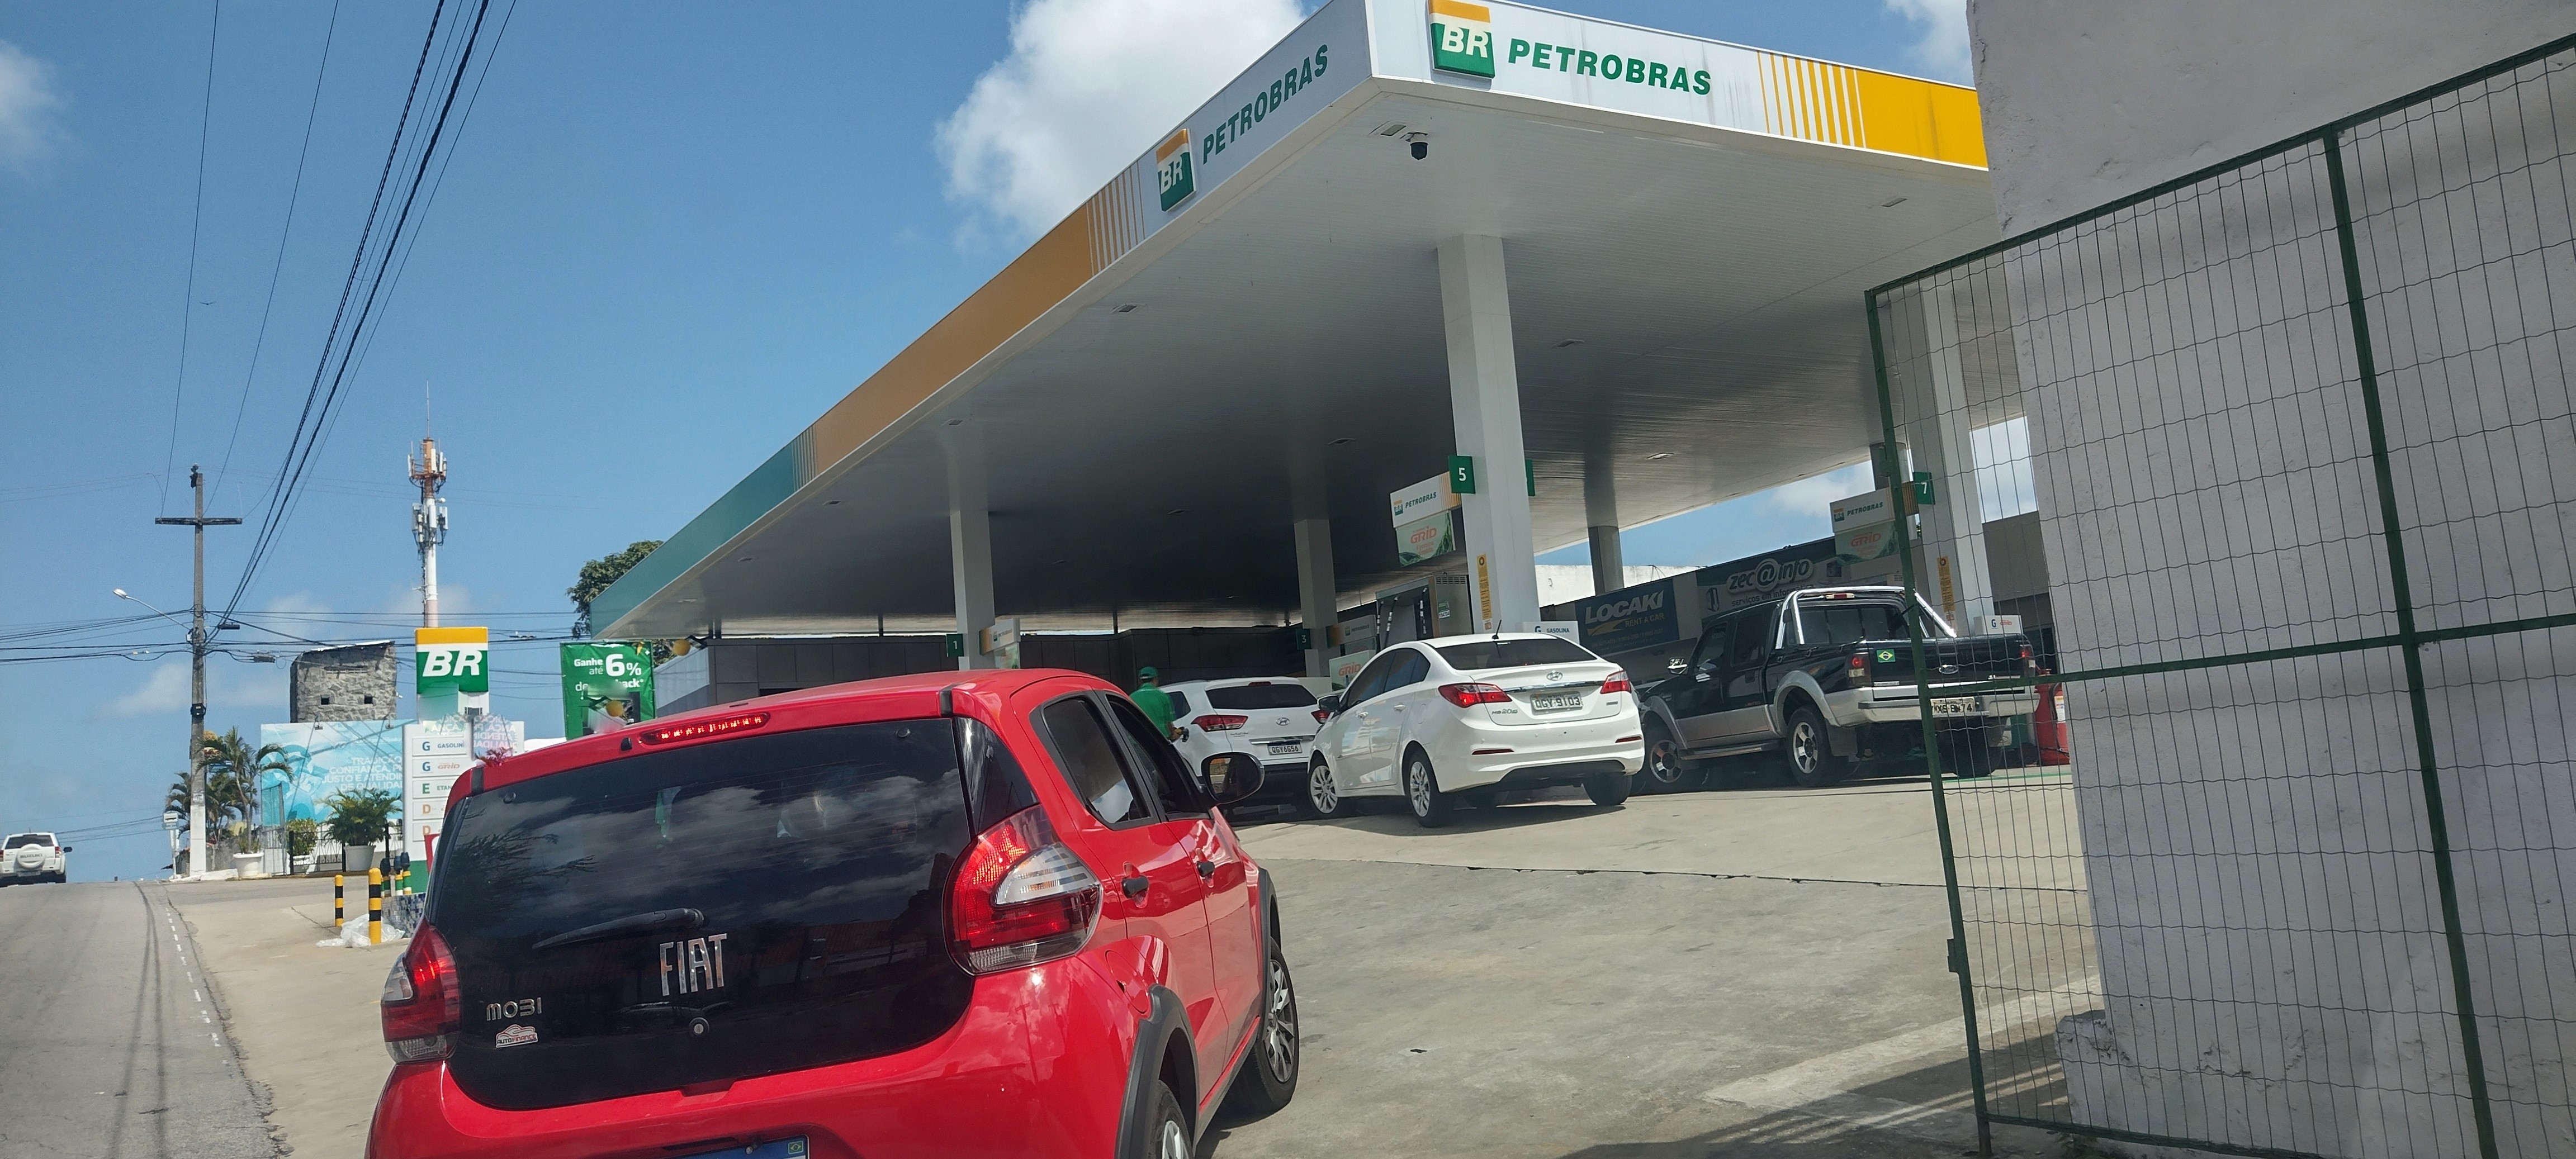 Procon Natal realiza Pesquisa de Preço de Combustível na capital